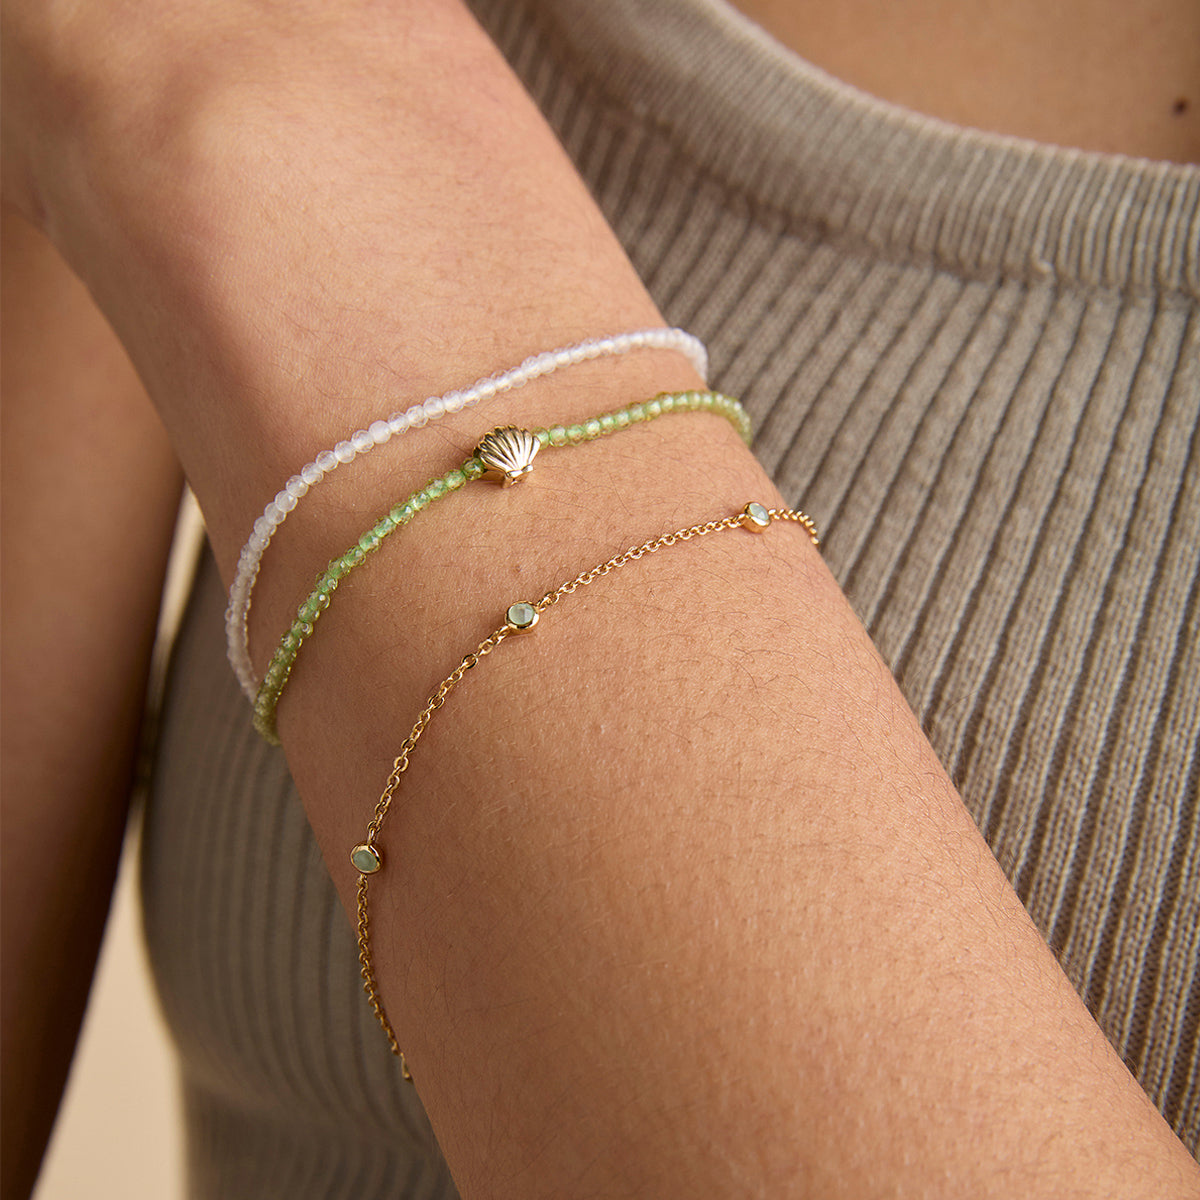 Aqua & Pearl Charm Bracelet in Gold